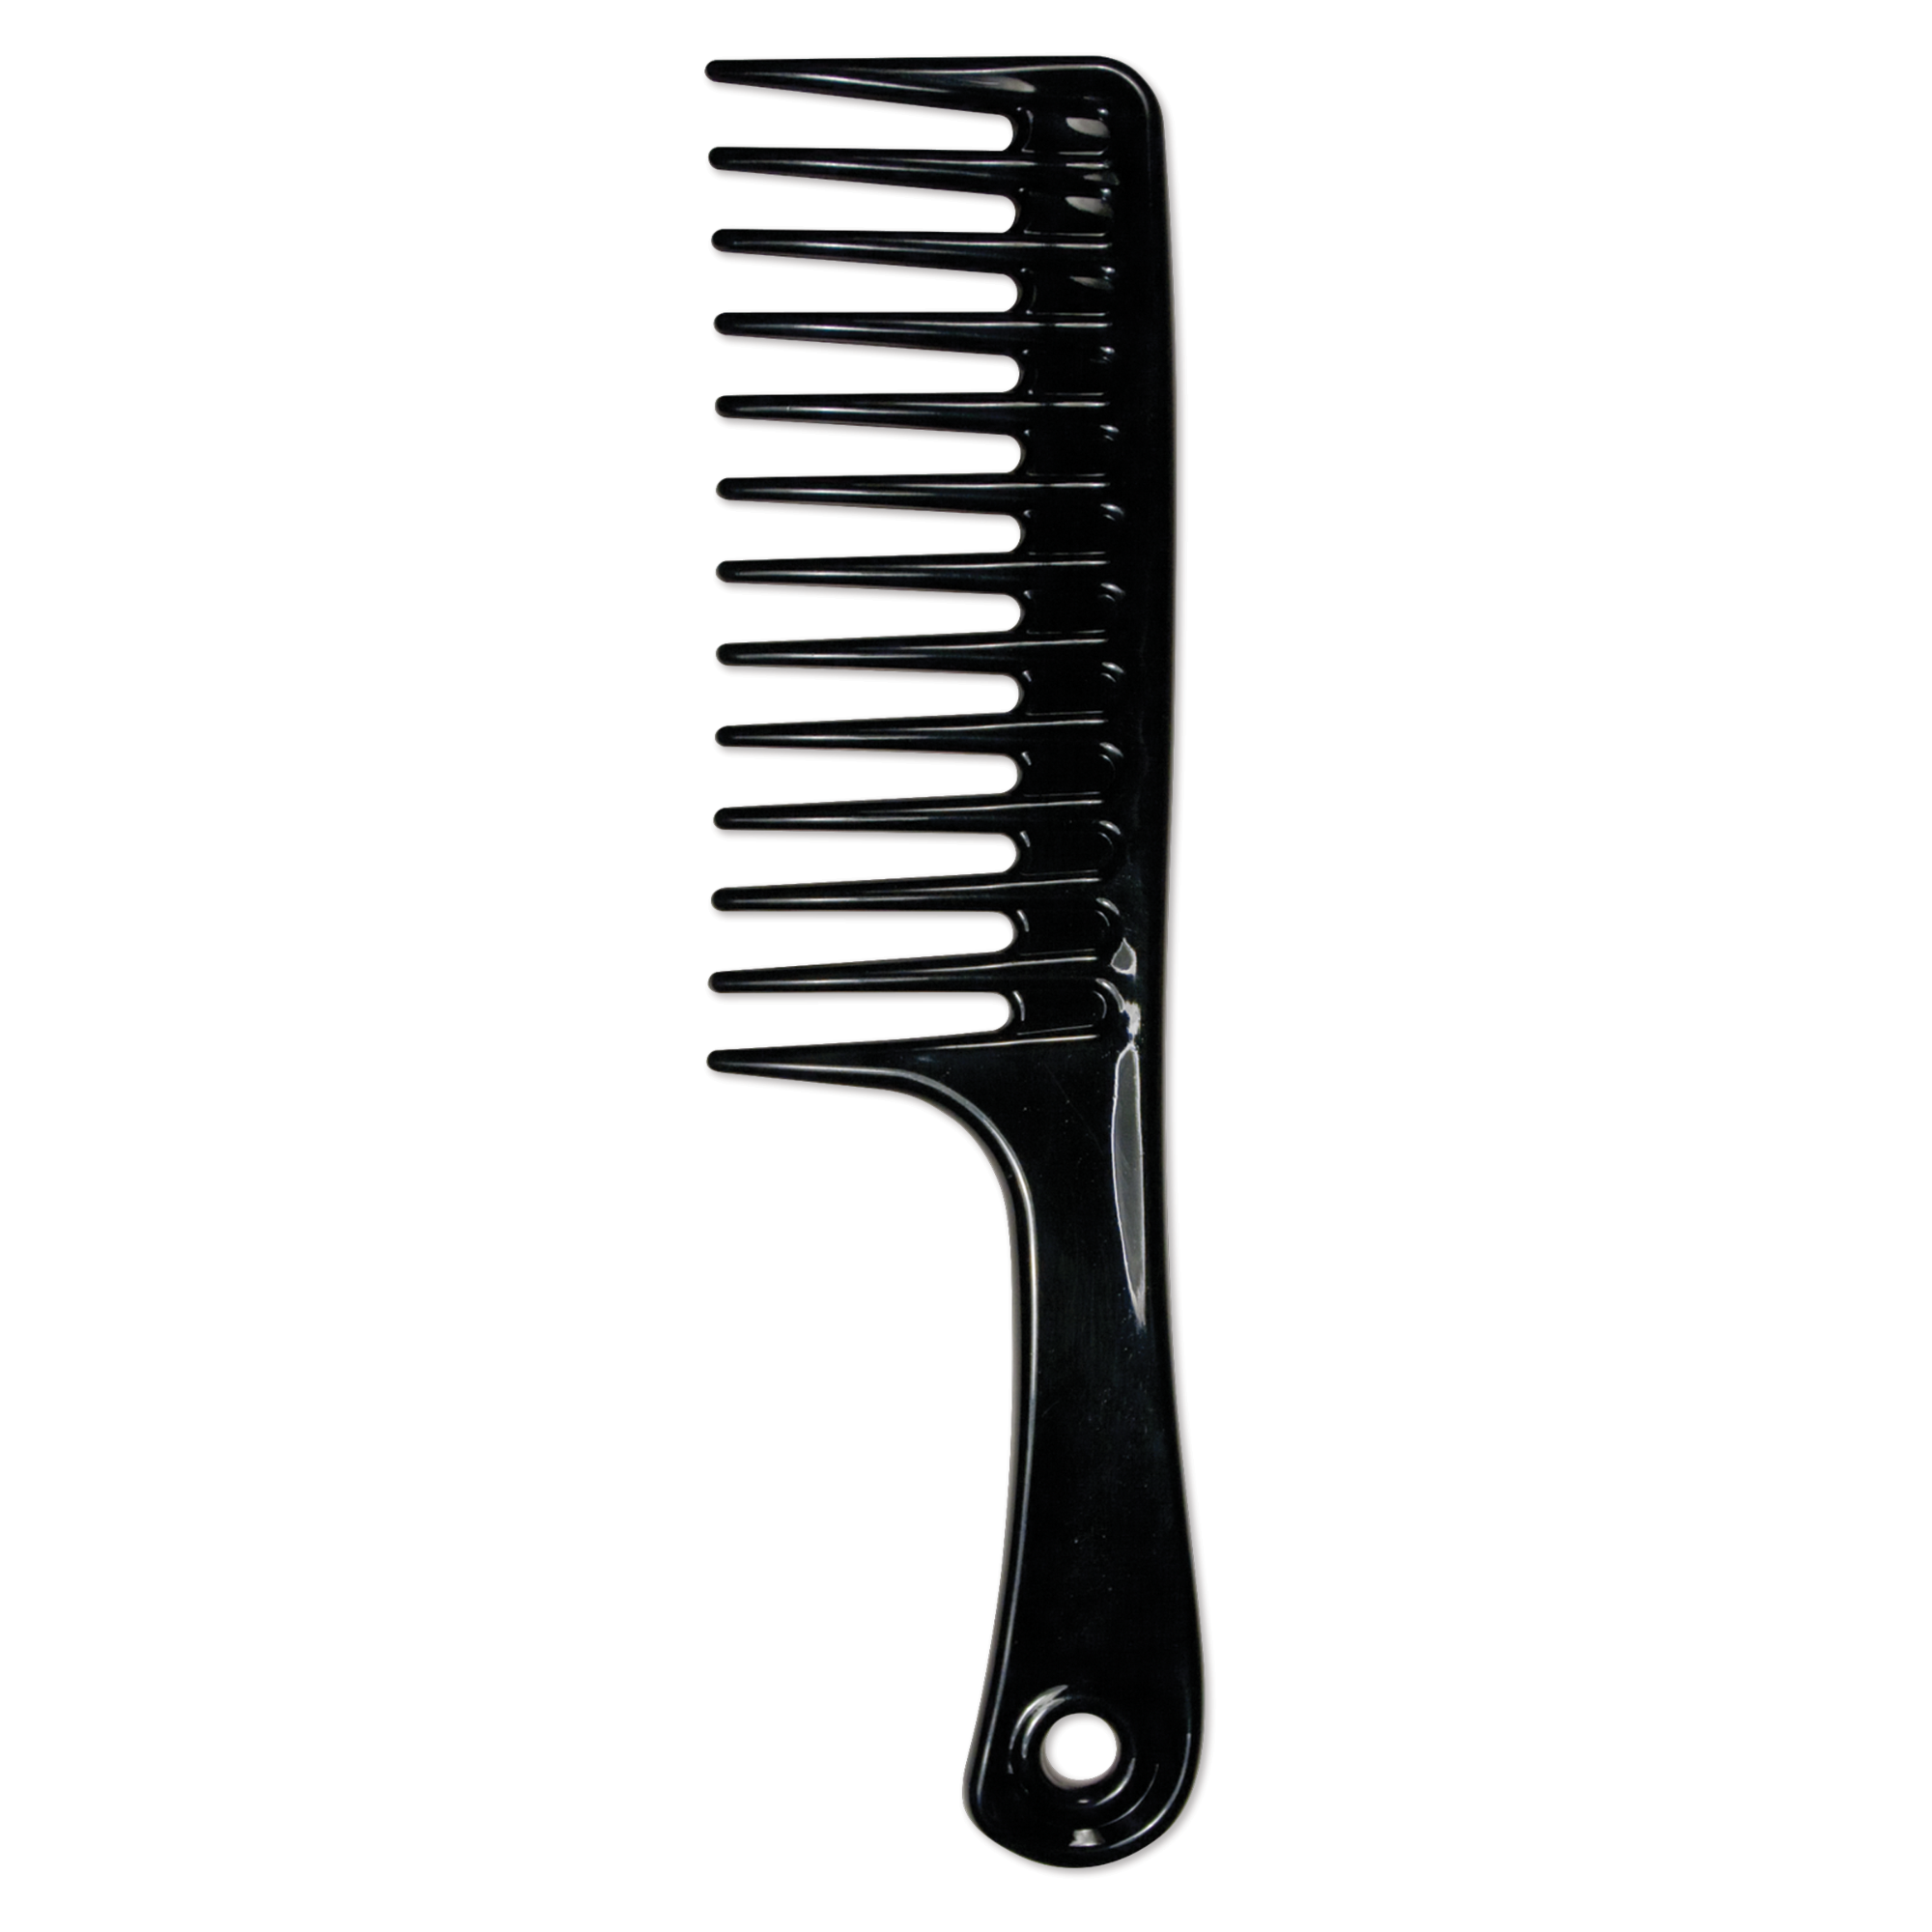 Extra Large Rake Comb - 9-3/4"